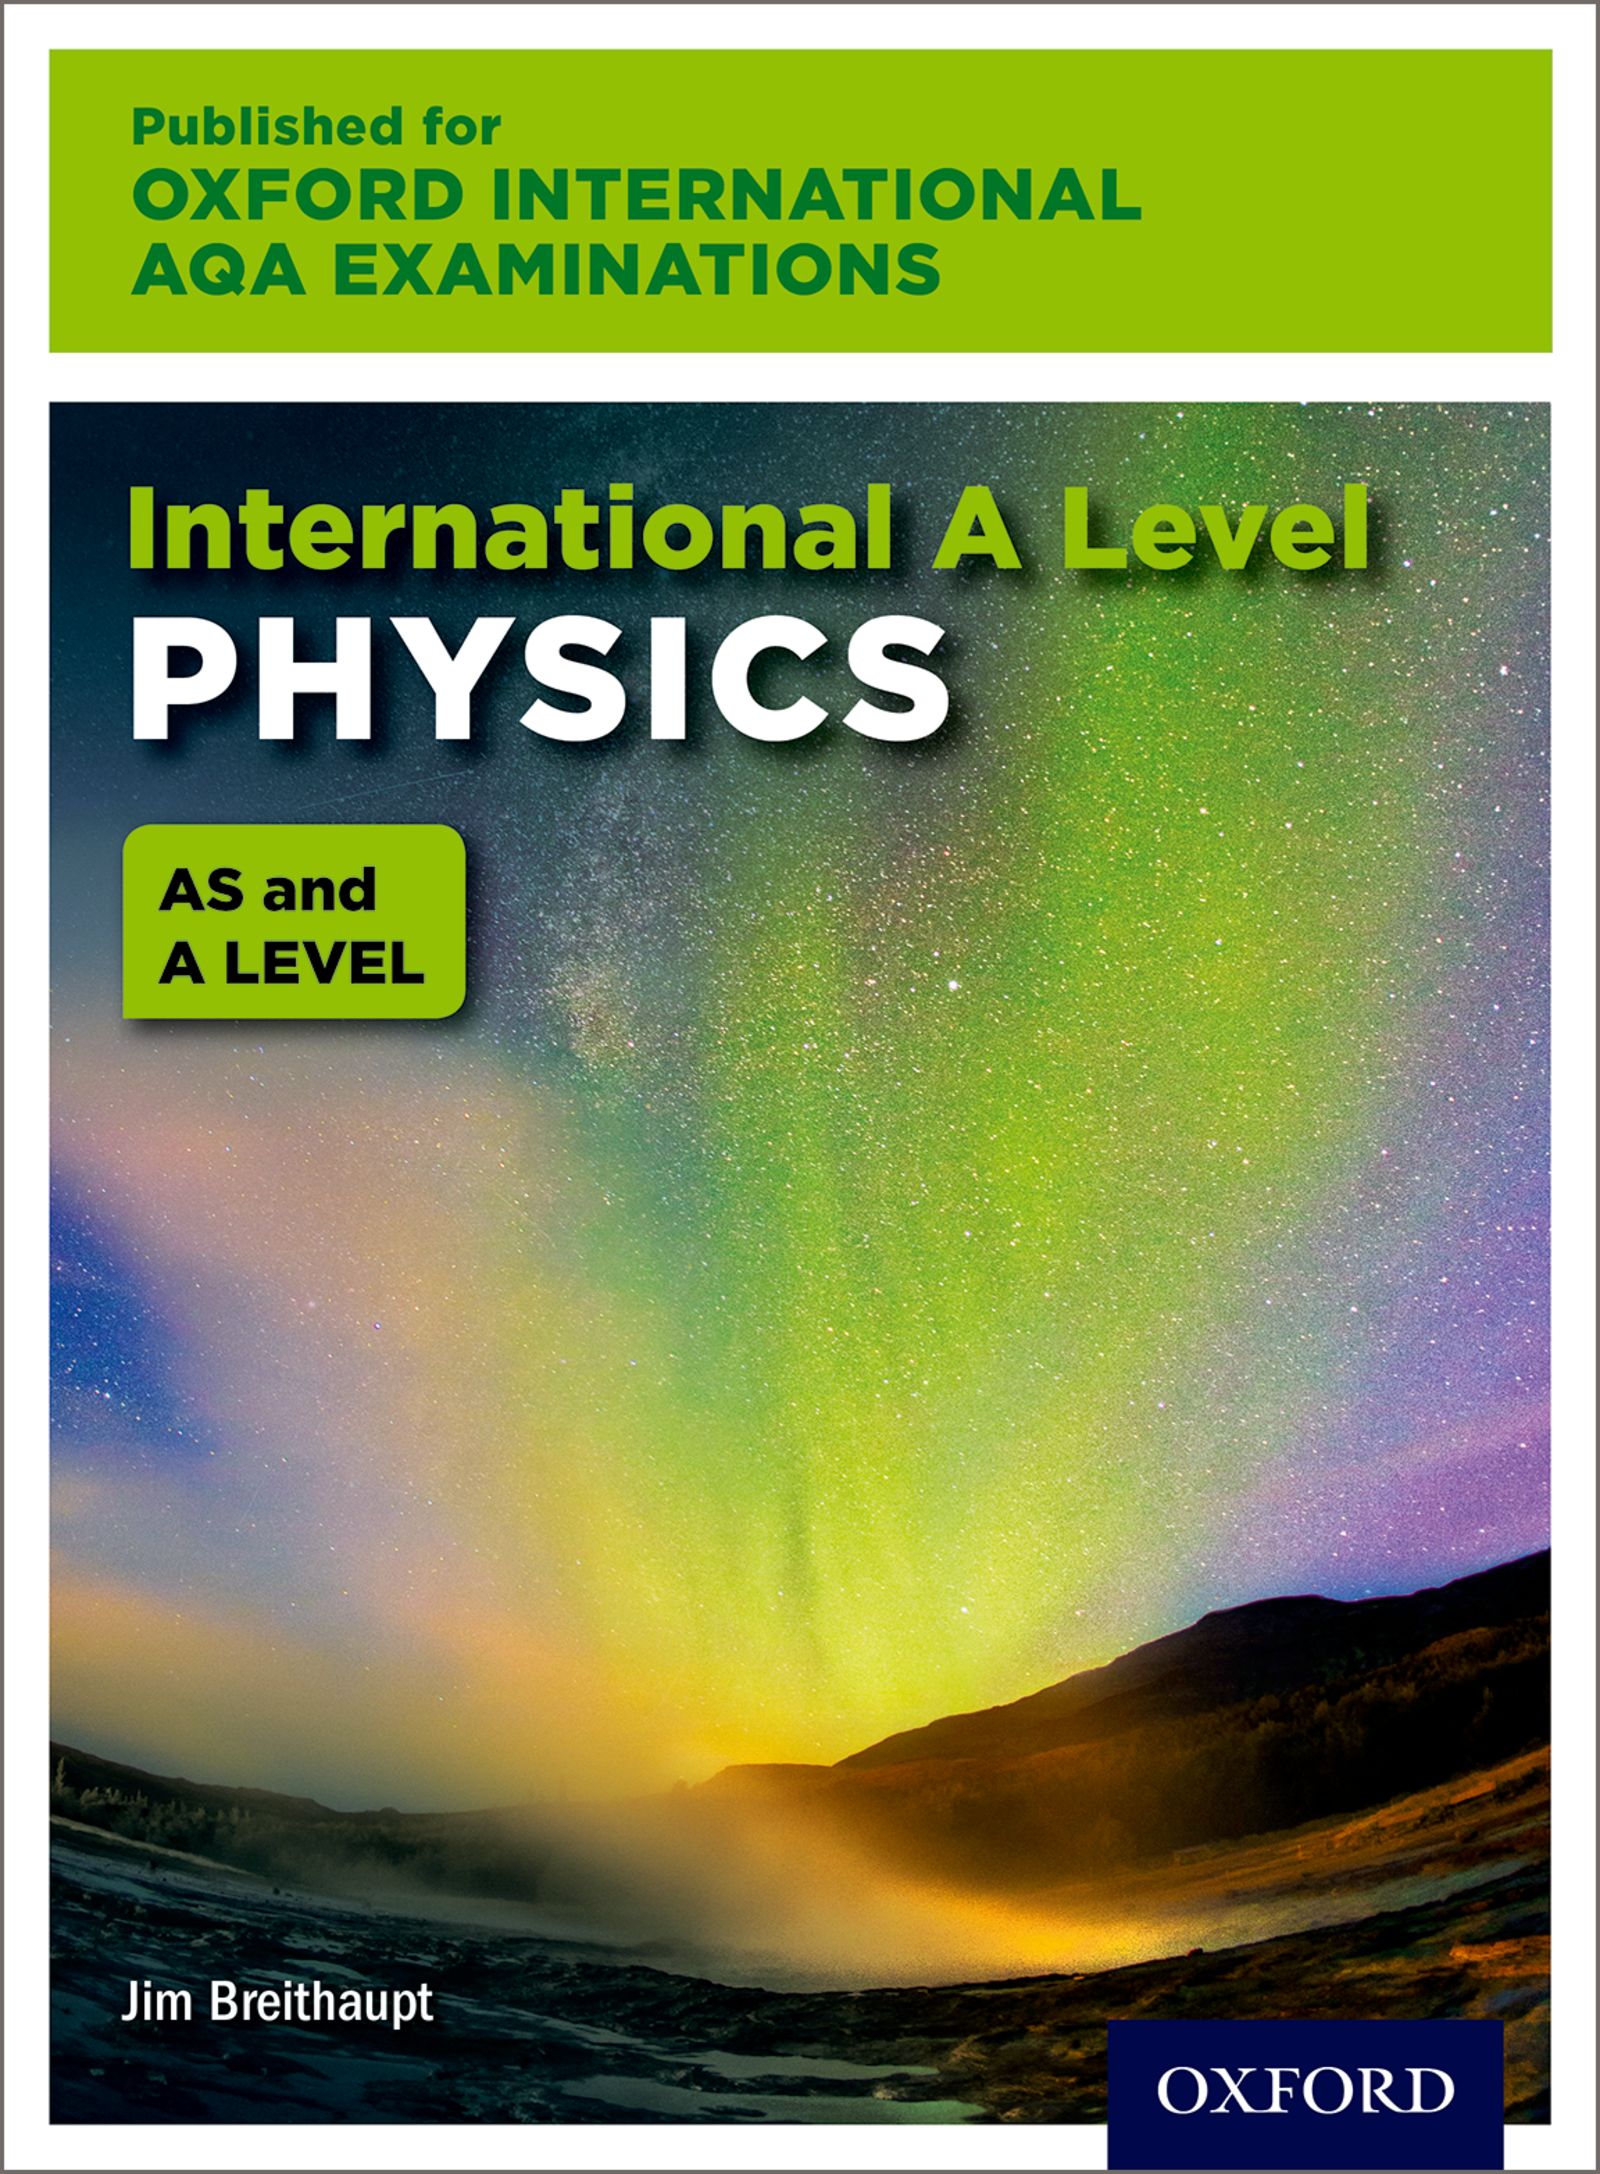 Oxford International Aqa Examinations International A Level Physics